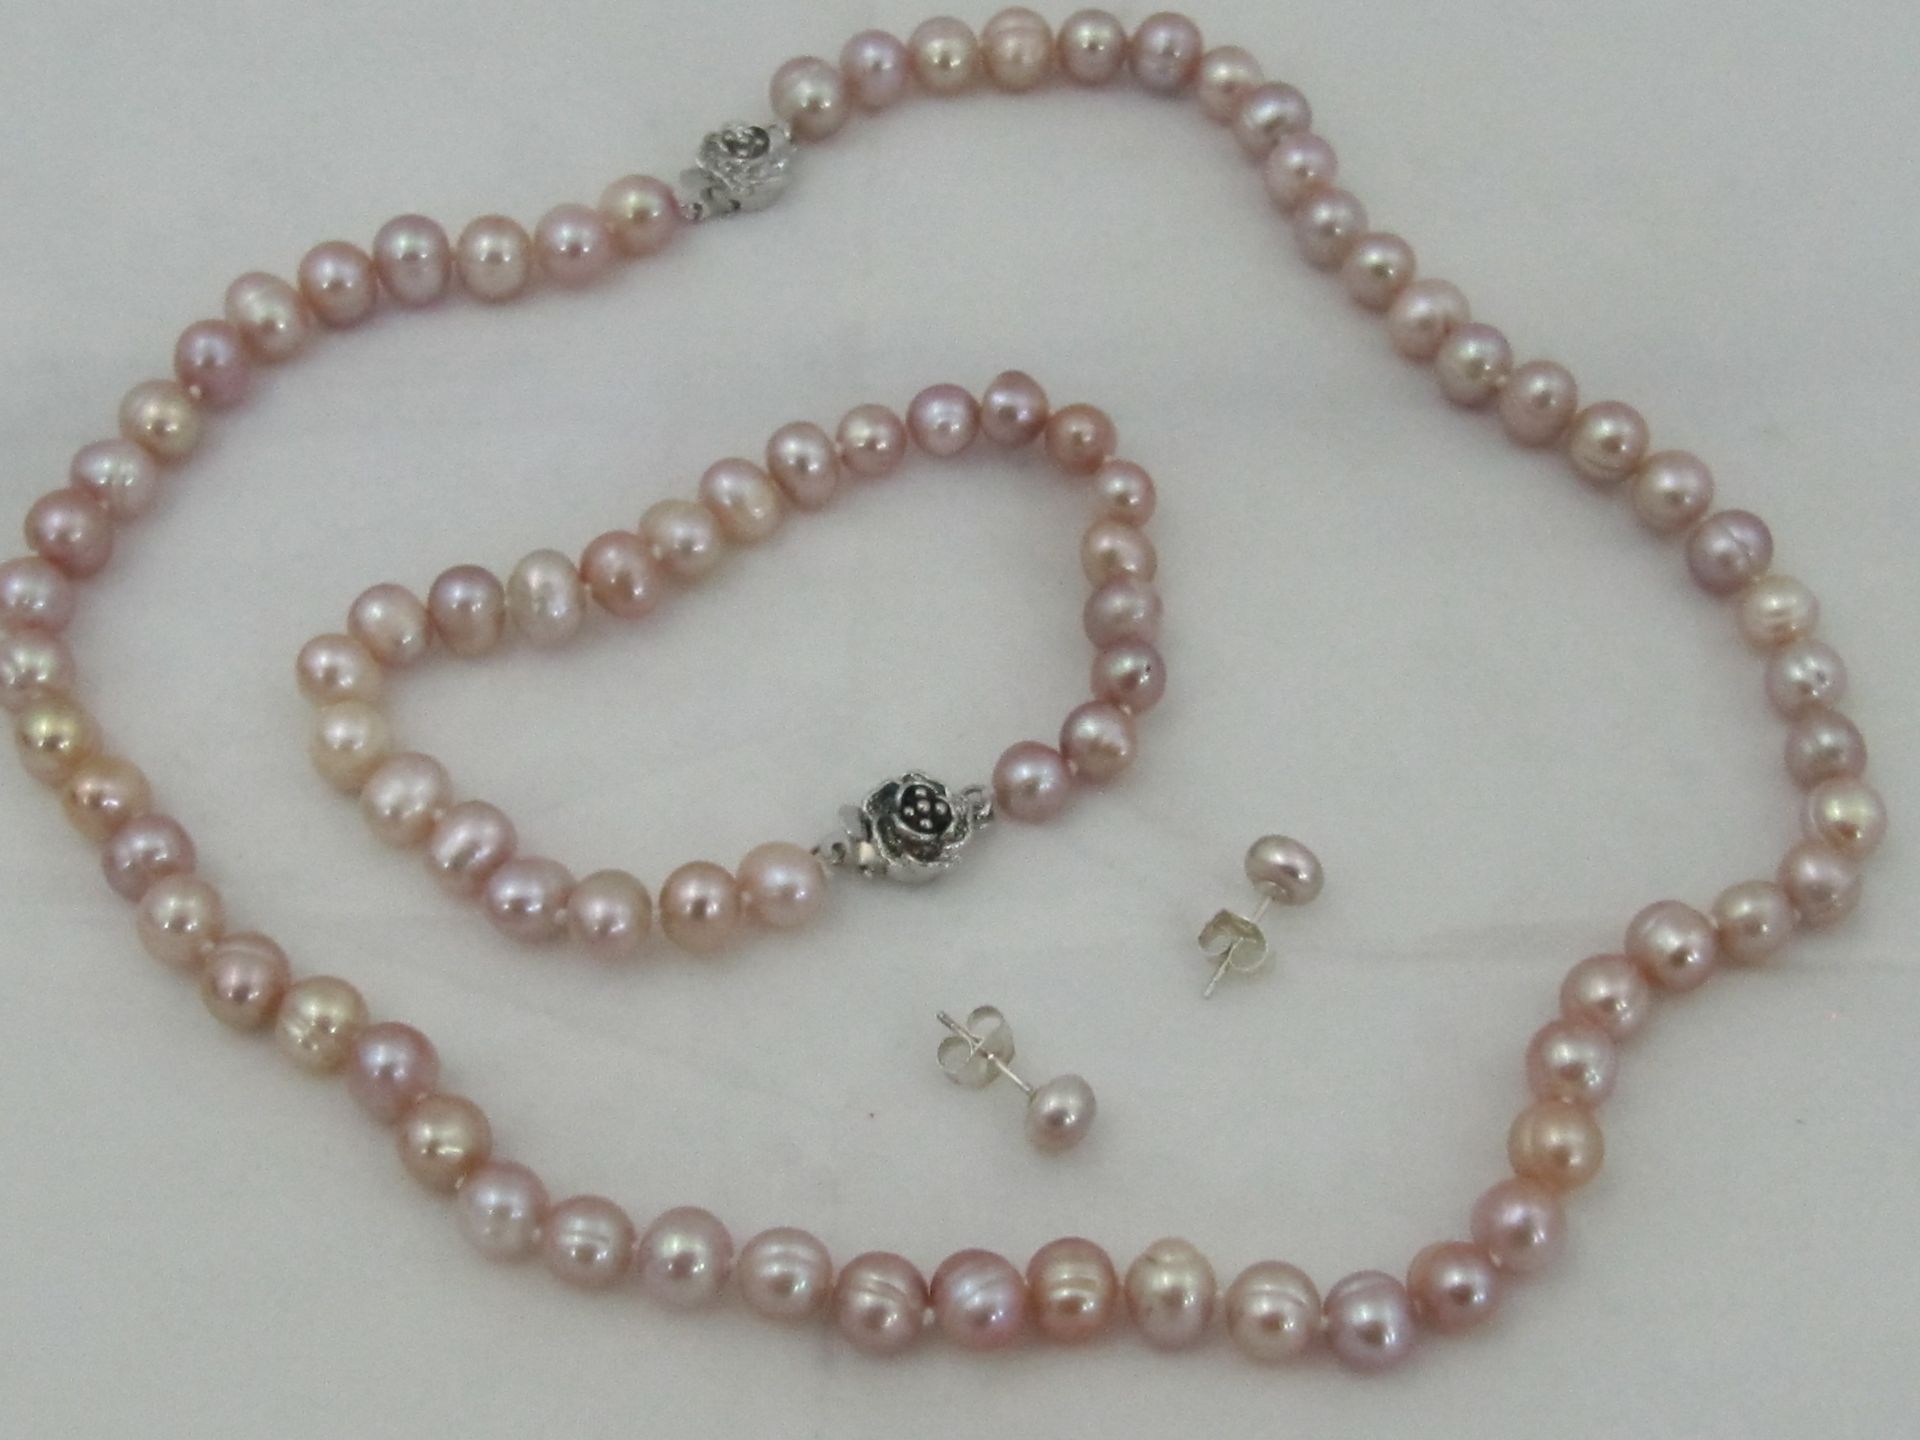 Real Pearl Necklace, Bracelet & Earring Set.